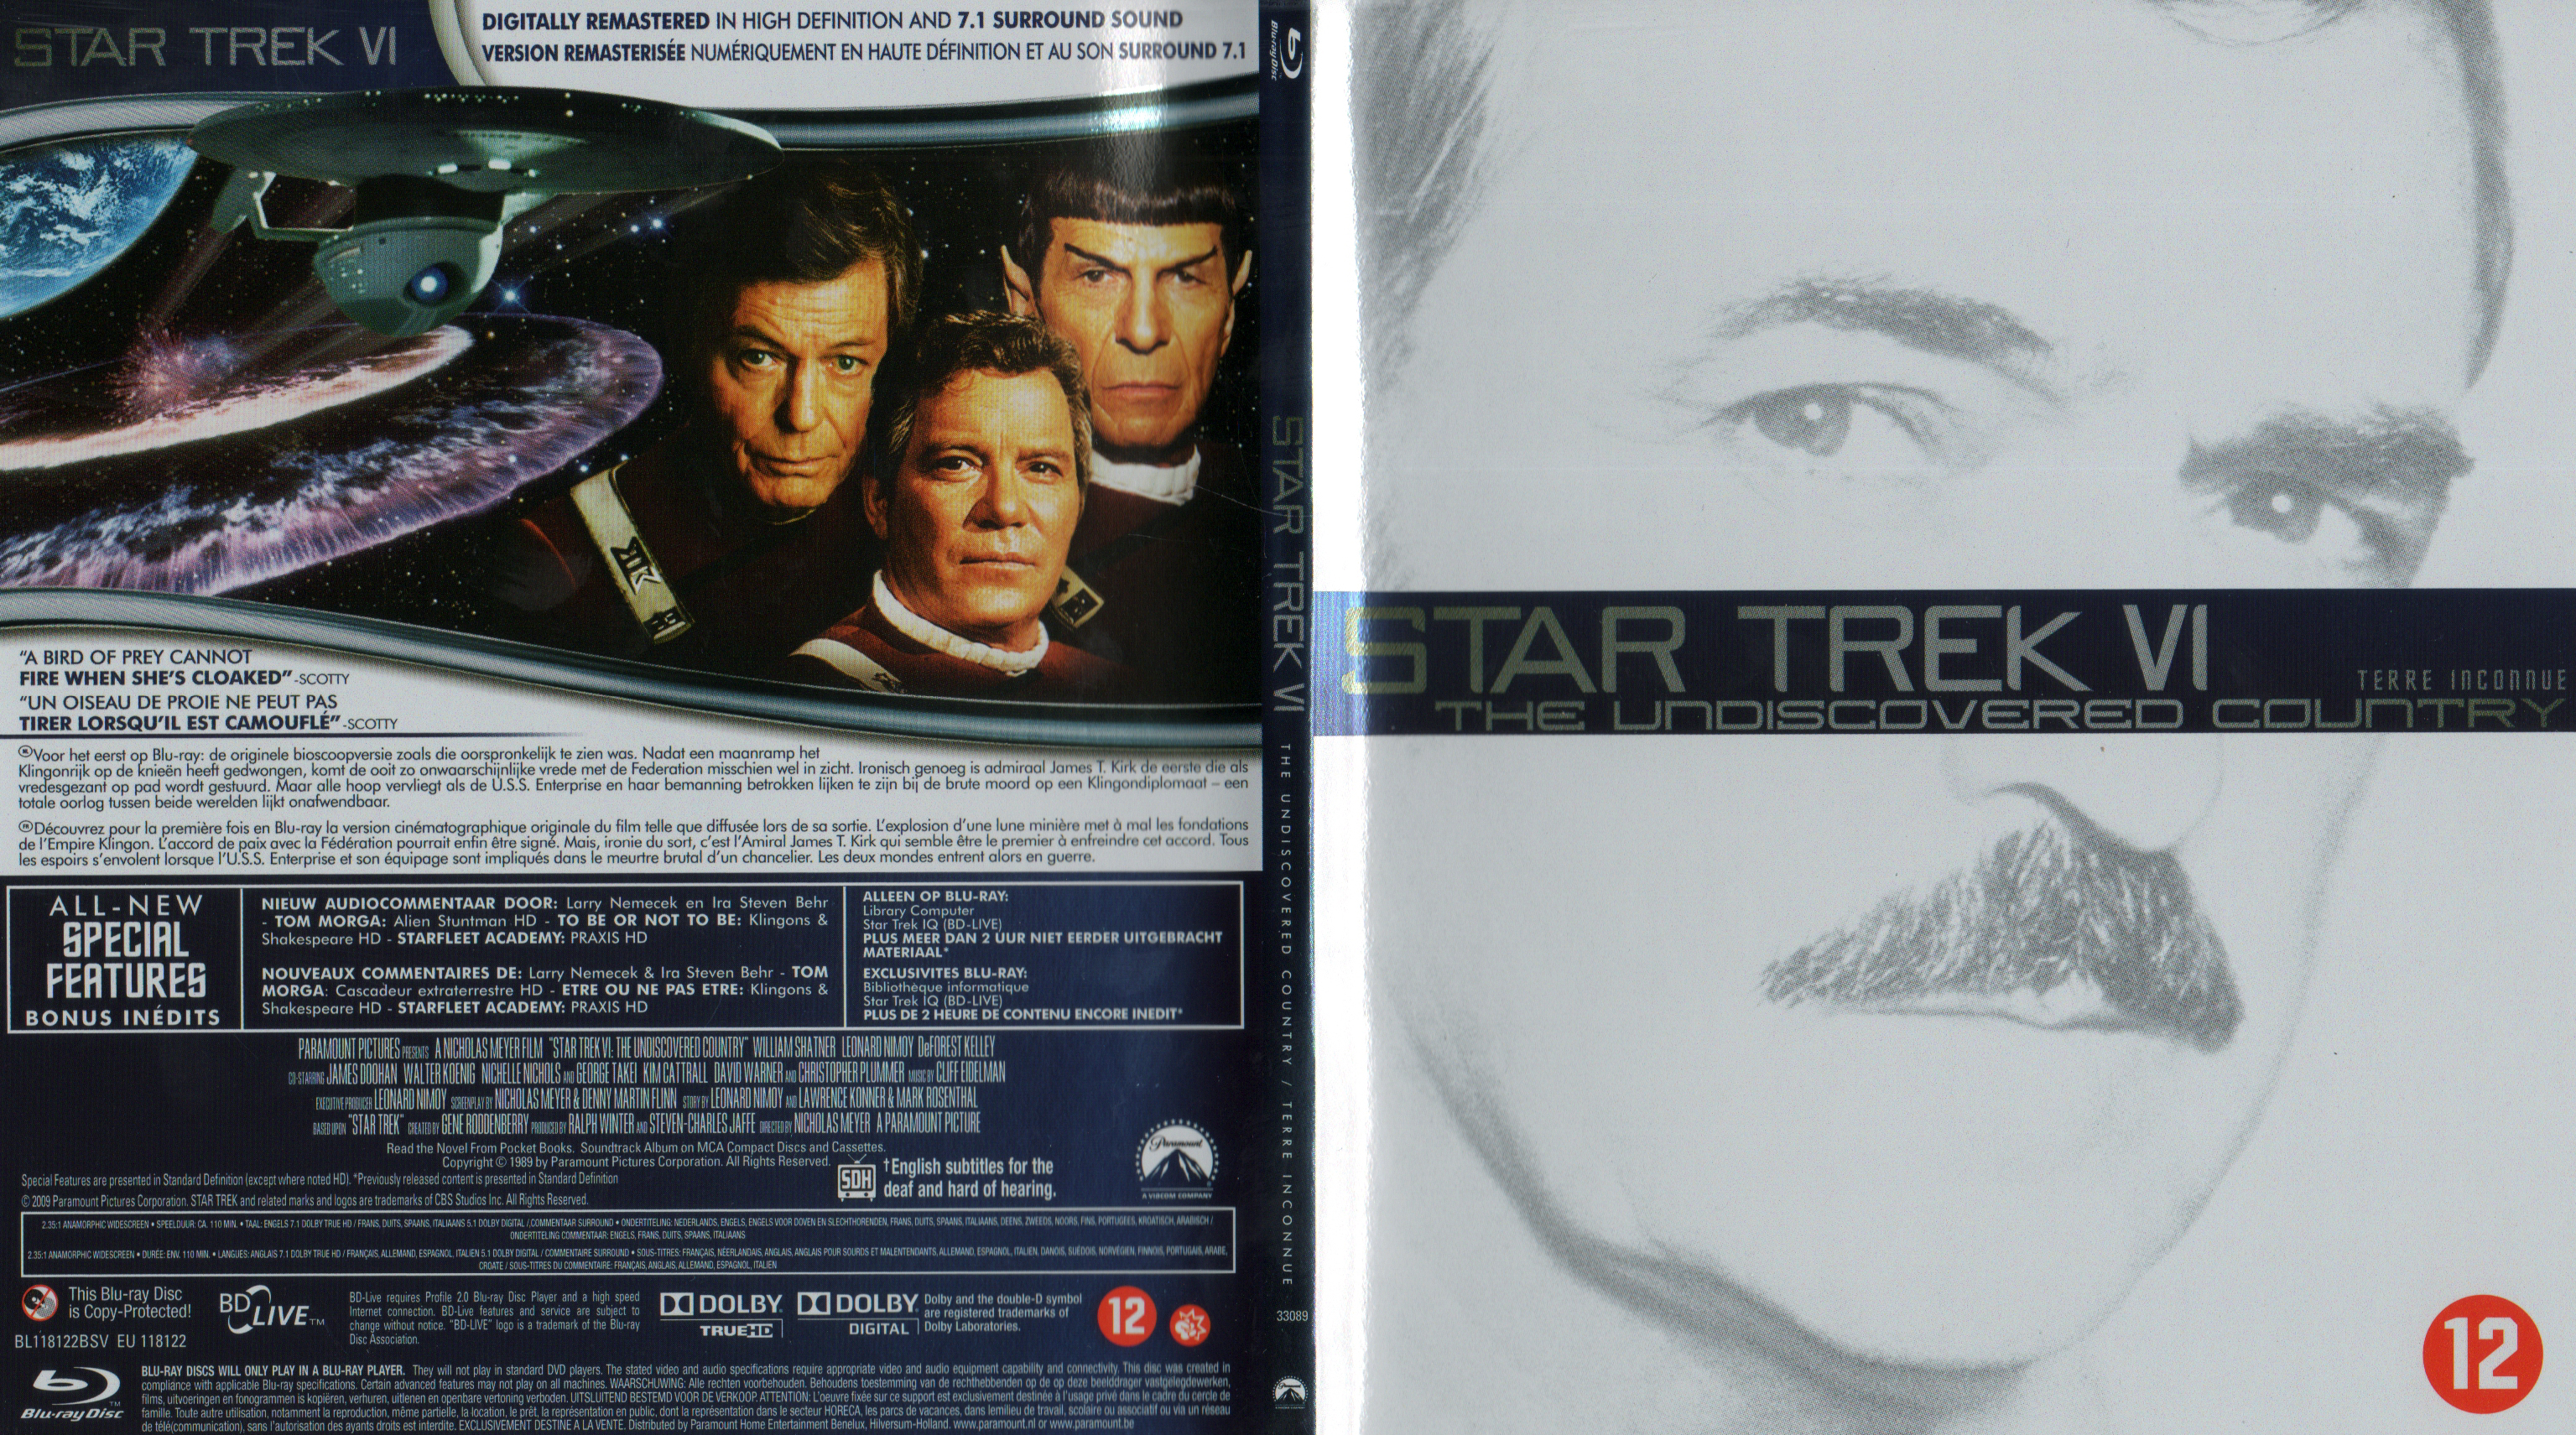 Jaquette DVD Star Trek 6 Terre inconnue (BLU-RAY) v2